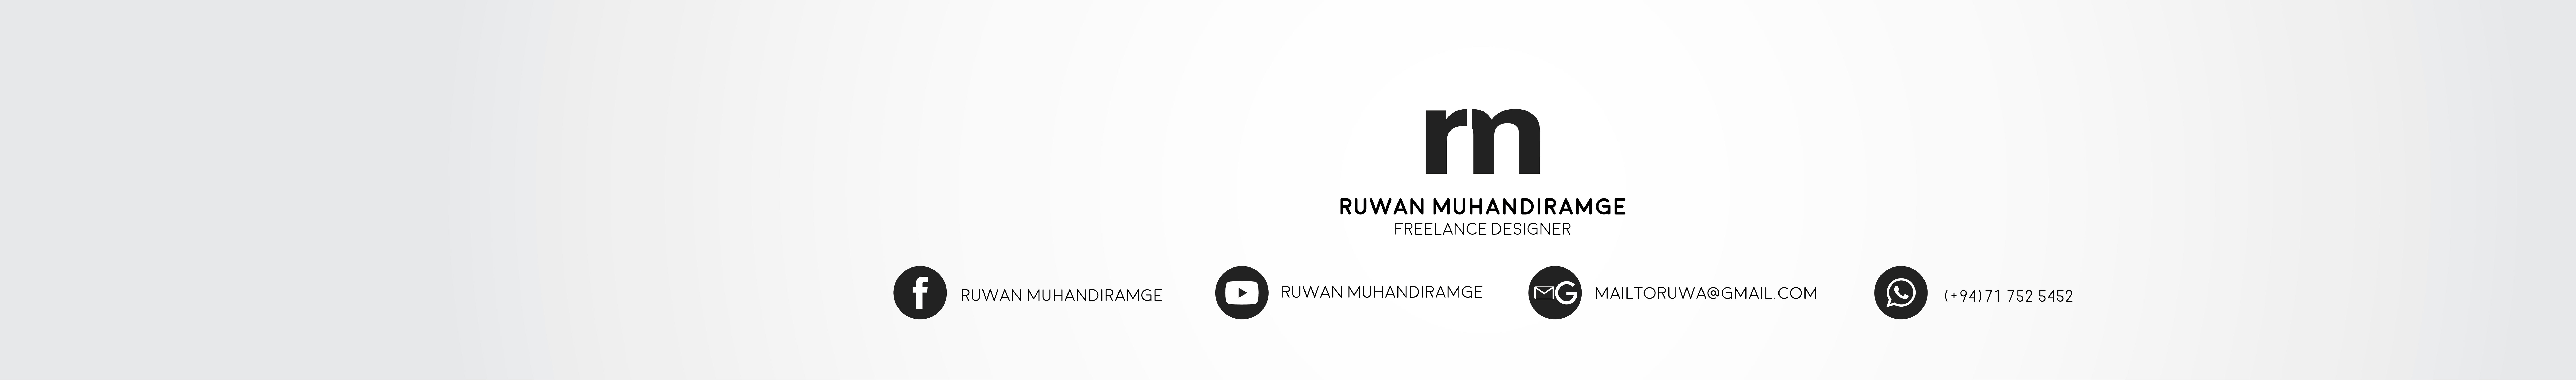 Ruwan Muhandiramge のプロファイルバナー